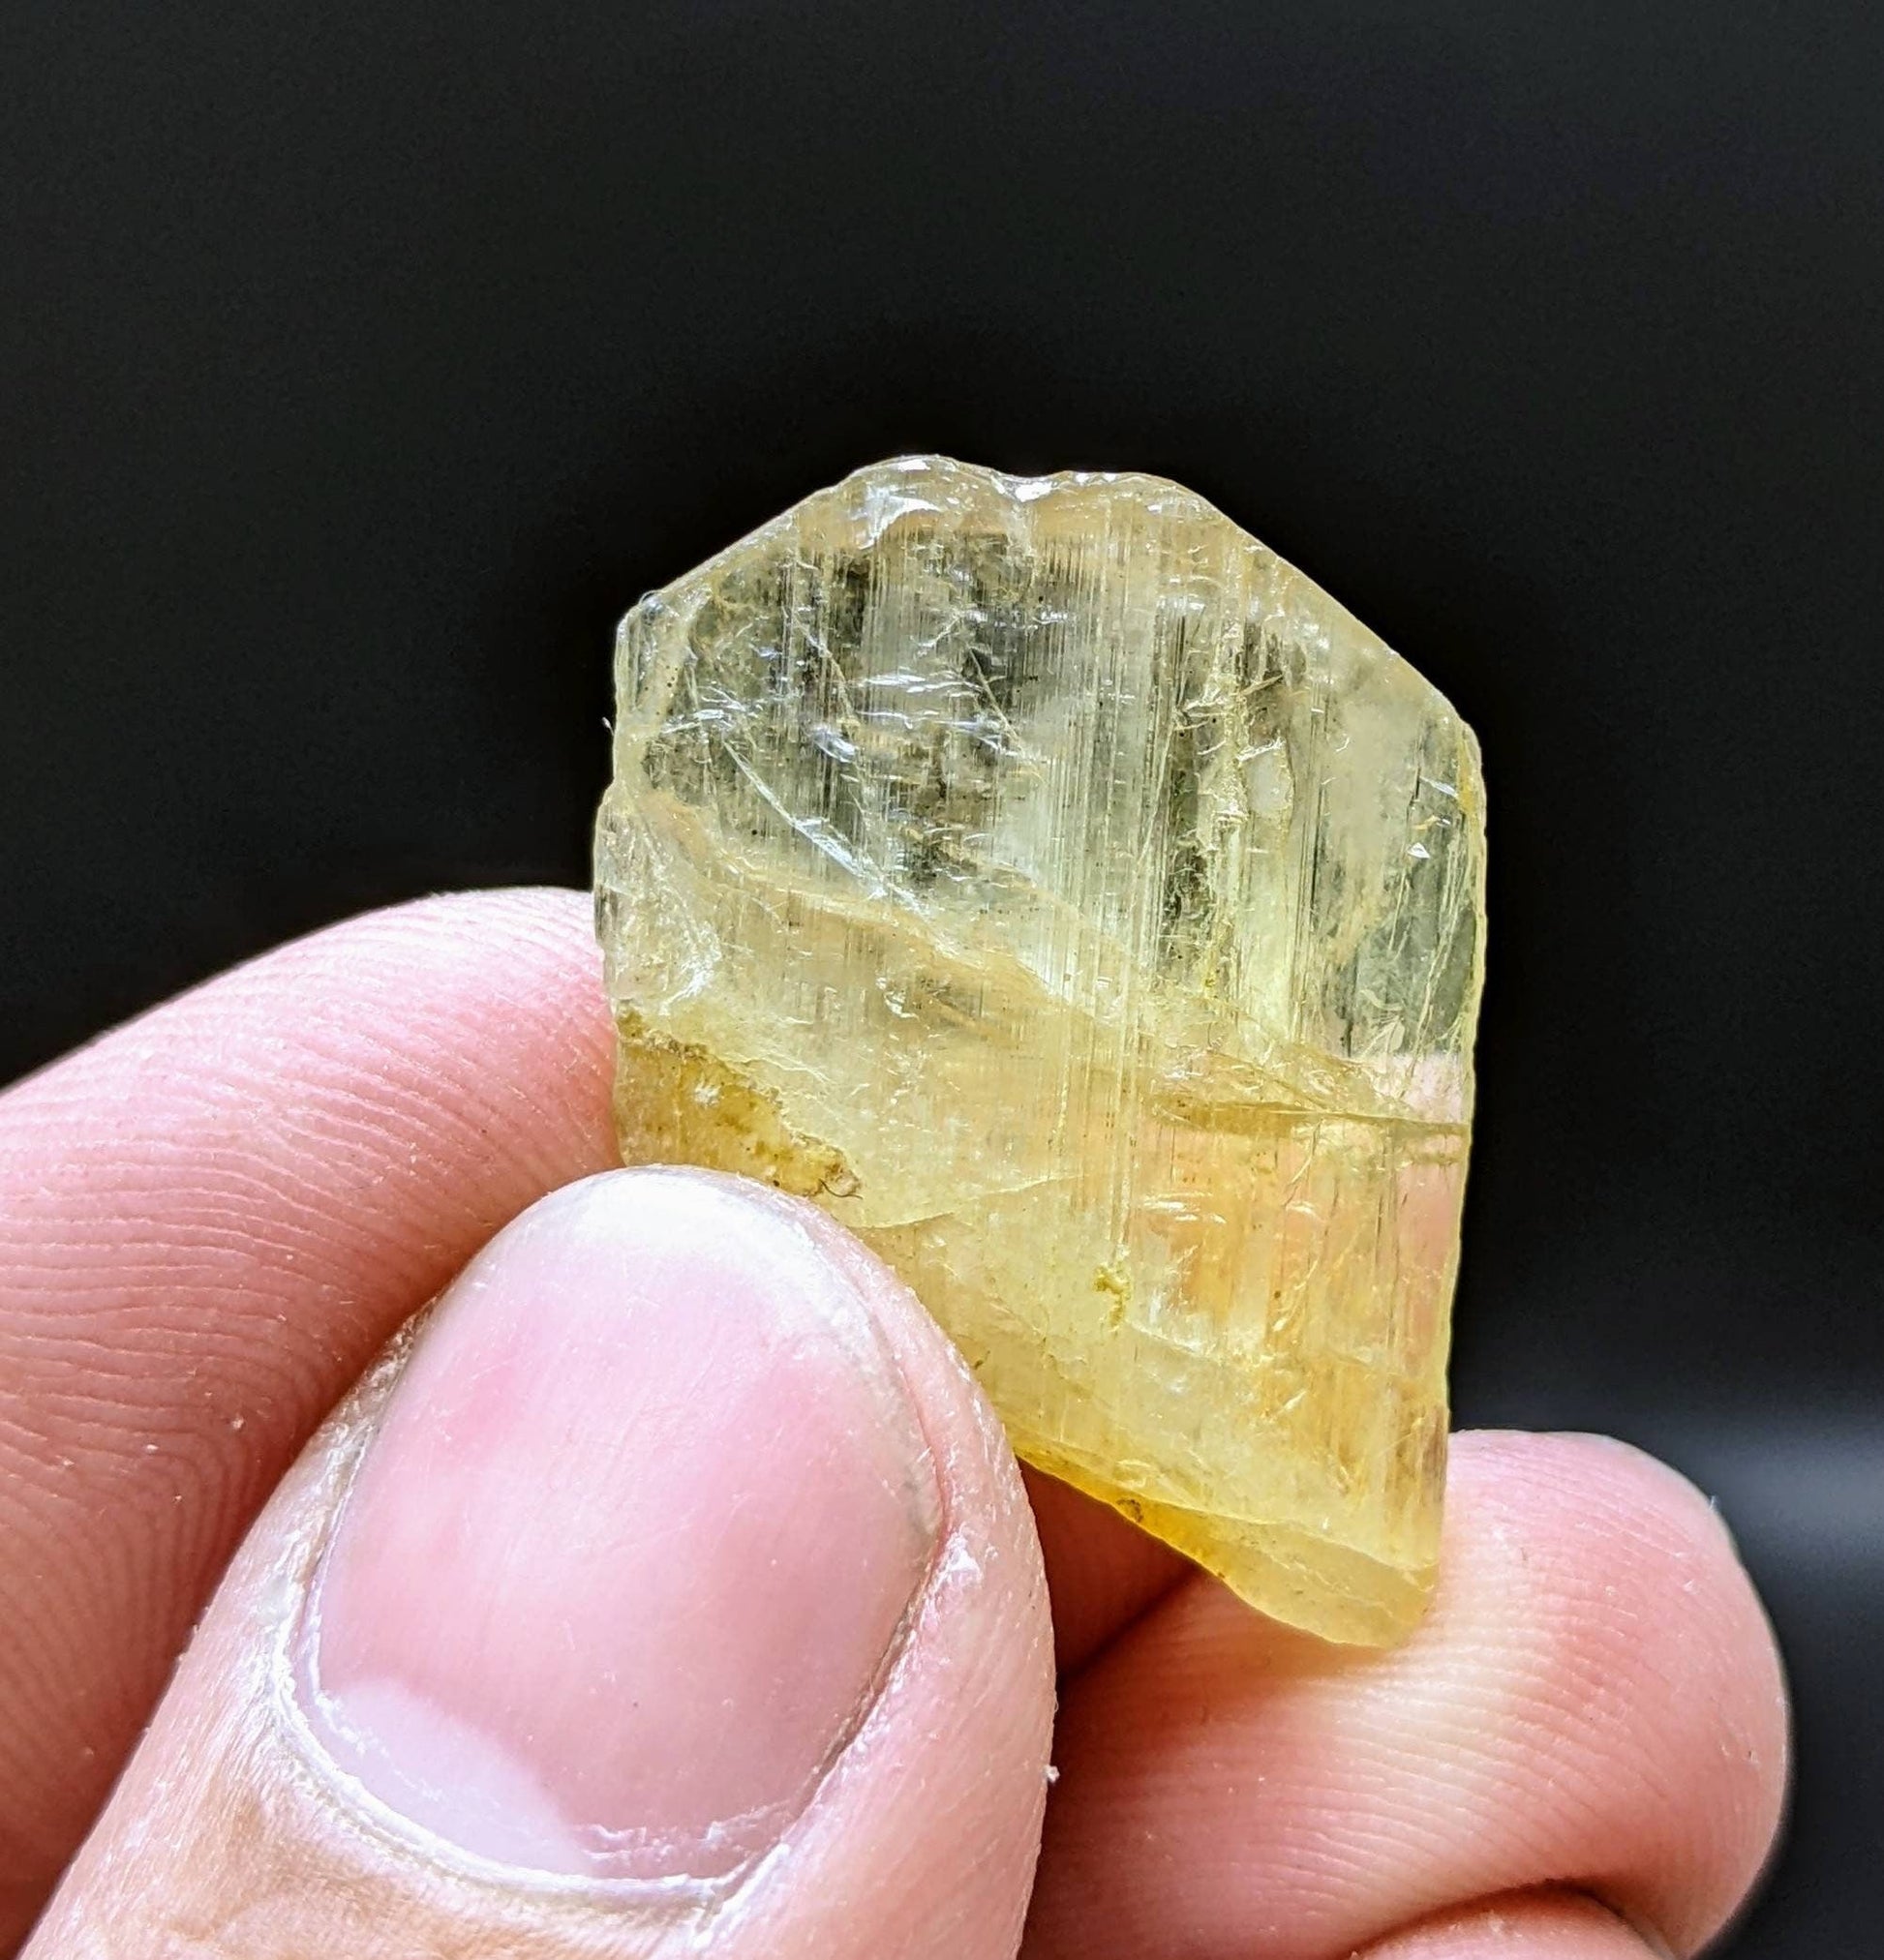 ARSAA GEMS AND MINERALSYellow Richterite var vanchite terminated crystal from Badakhshan Afghanistan, 5.8 grams - Premium  from ARSAA GEMS AND MINERALS - Just $30.00! Shop now at ARSAA GEMS AND MINERALS